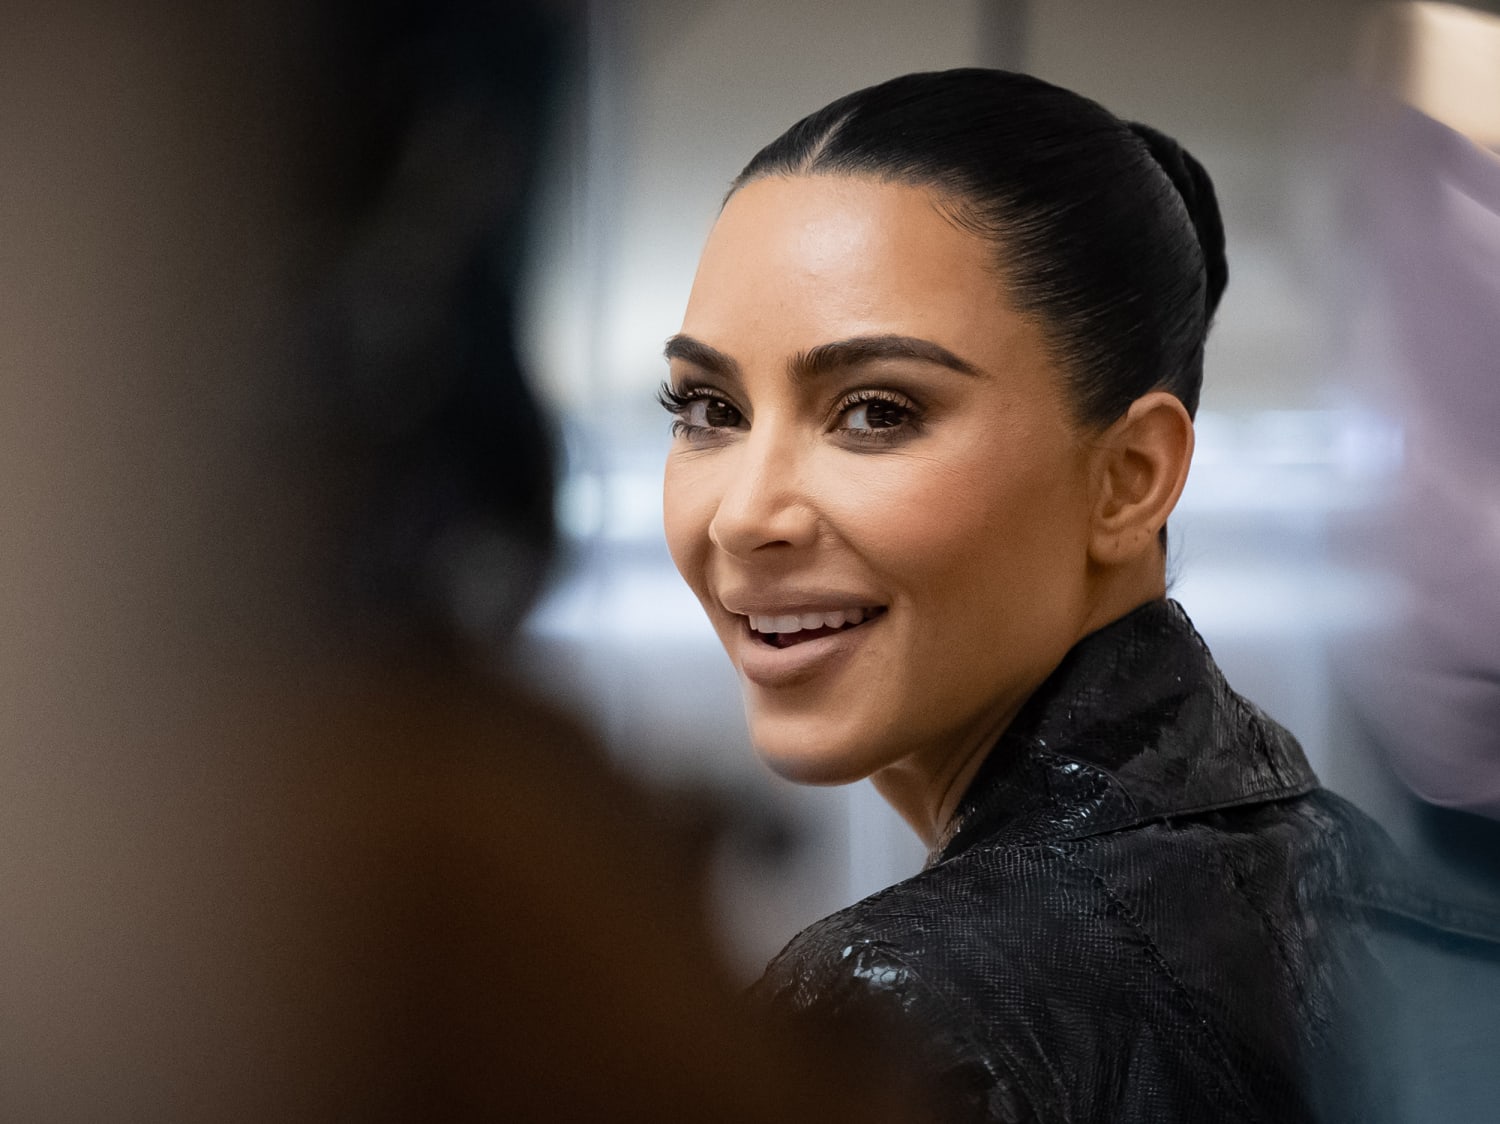 charles jensen recommends Does Kim Kardashian Like Anal